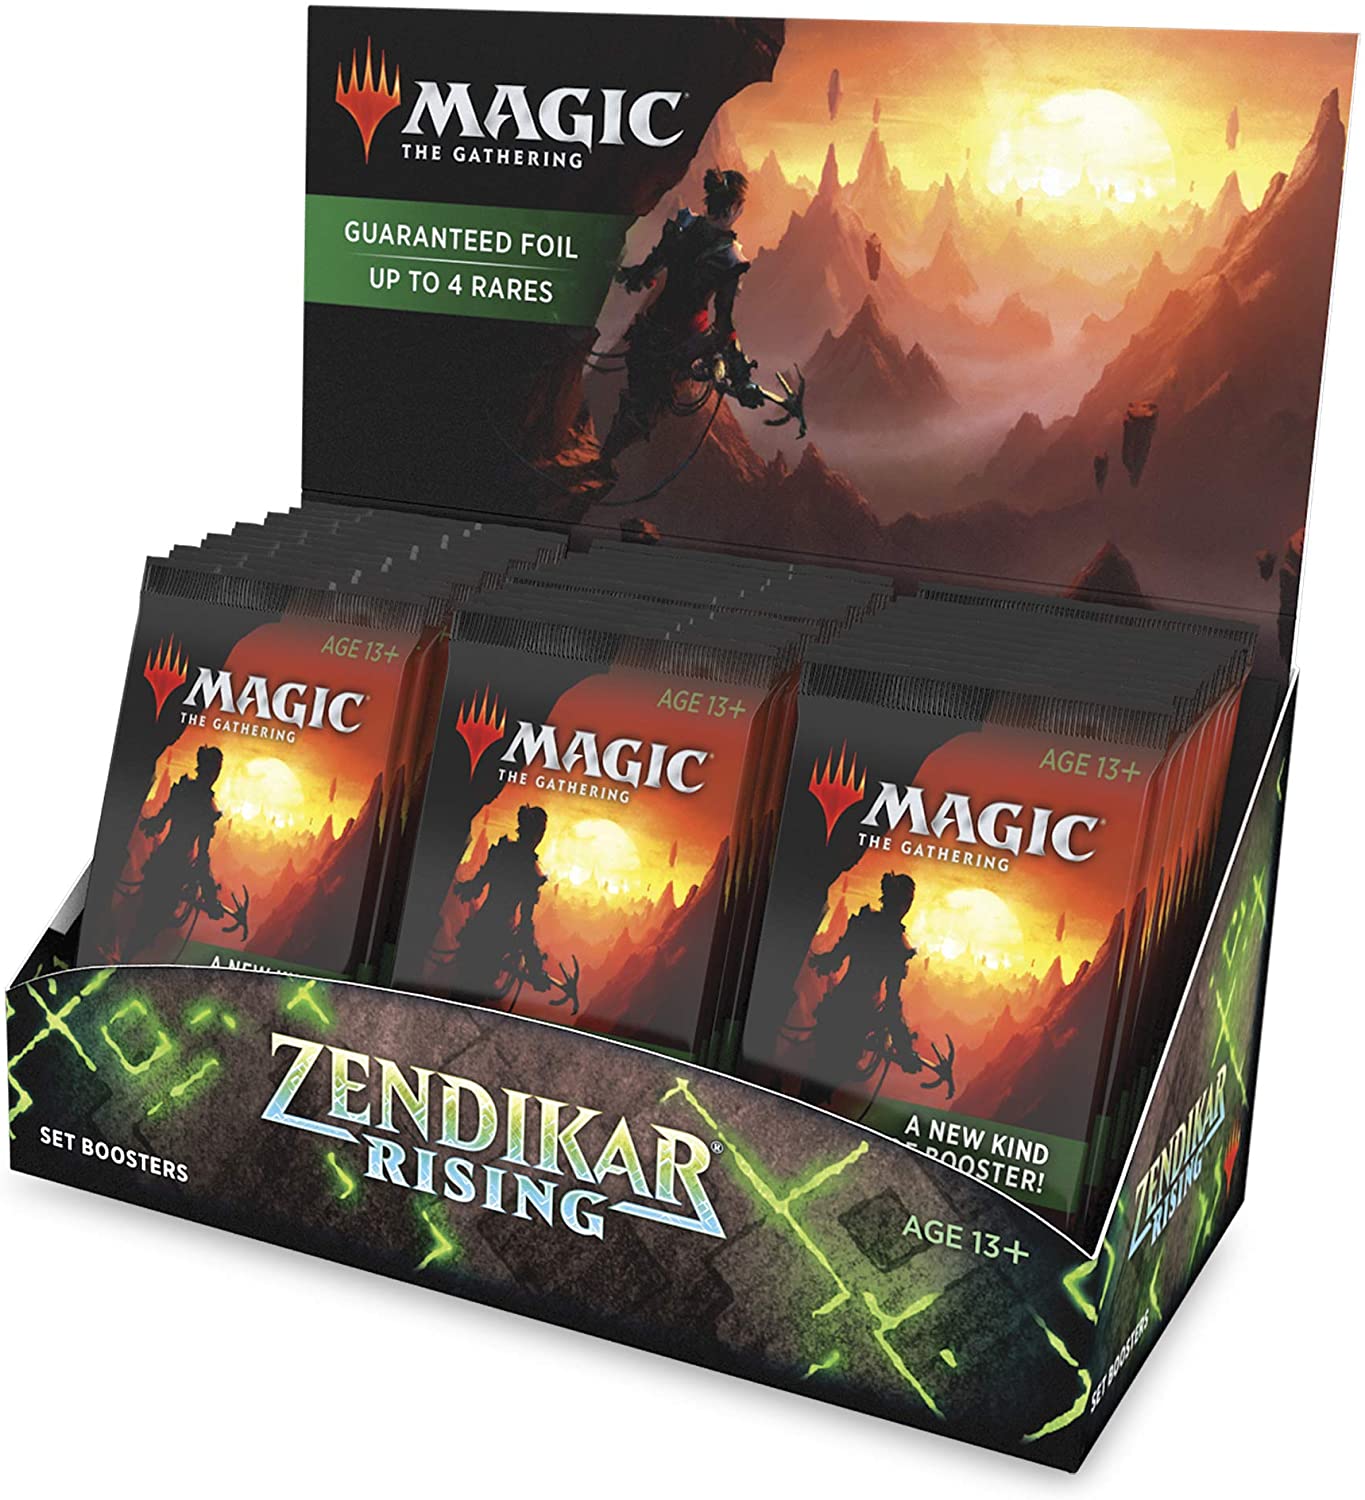 Magic: the Gathering Zendikar Rising Set Booster Box